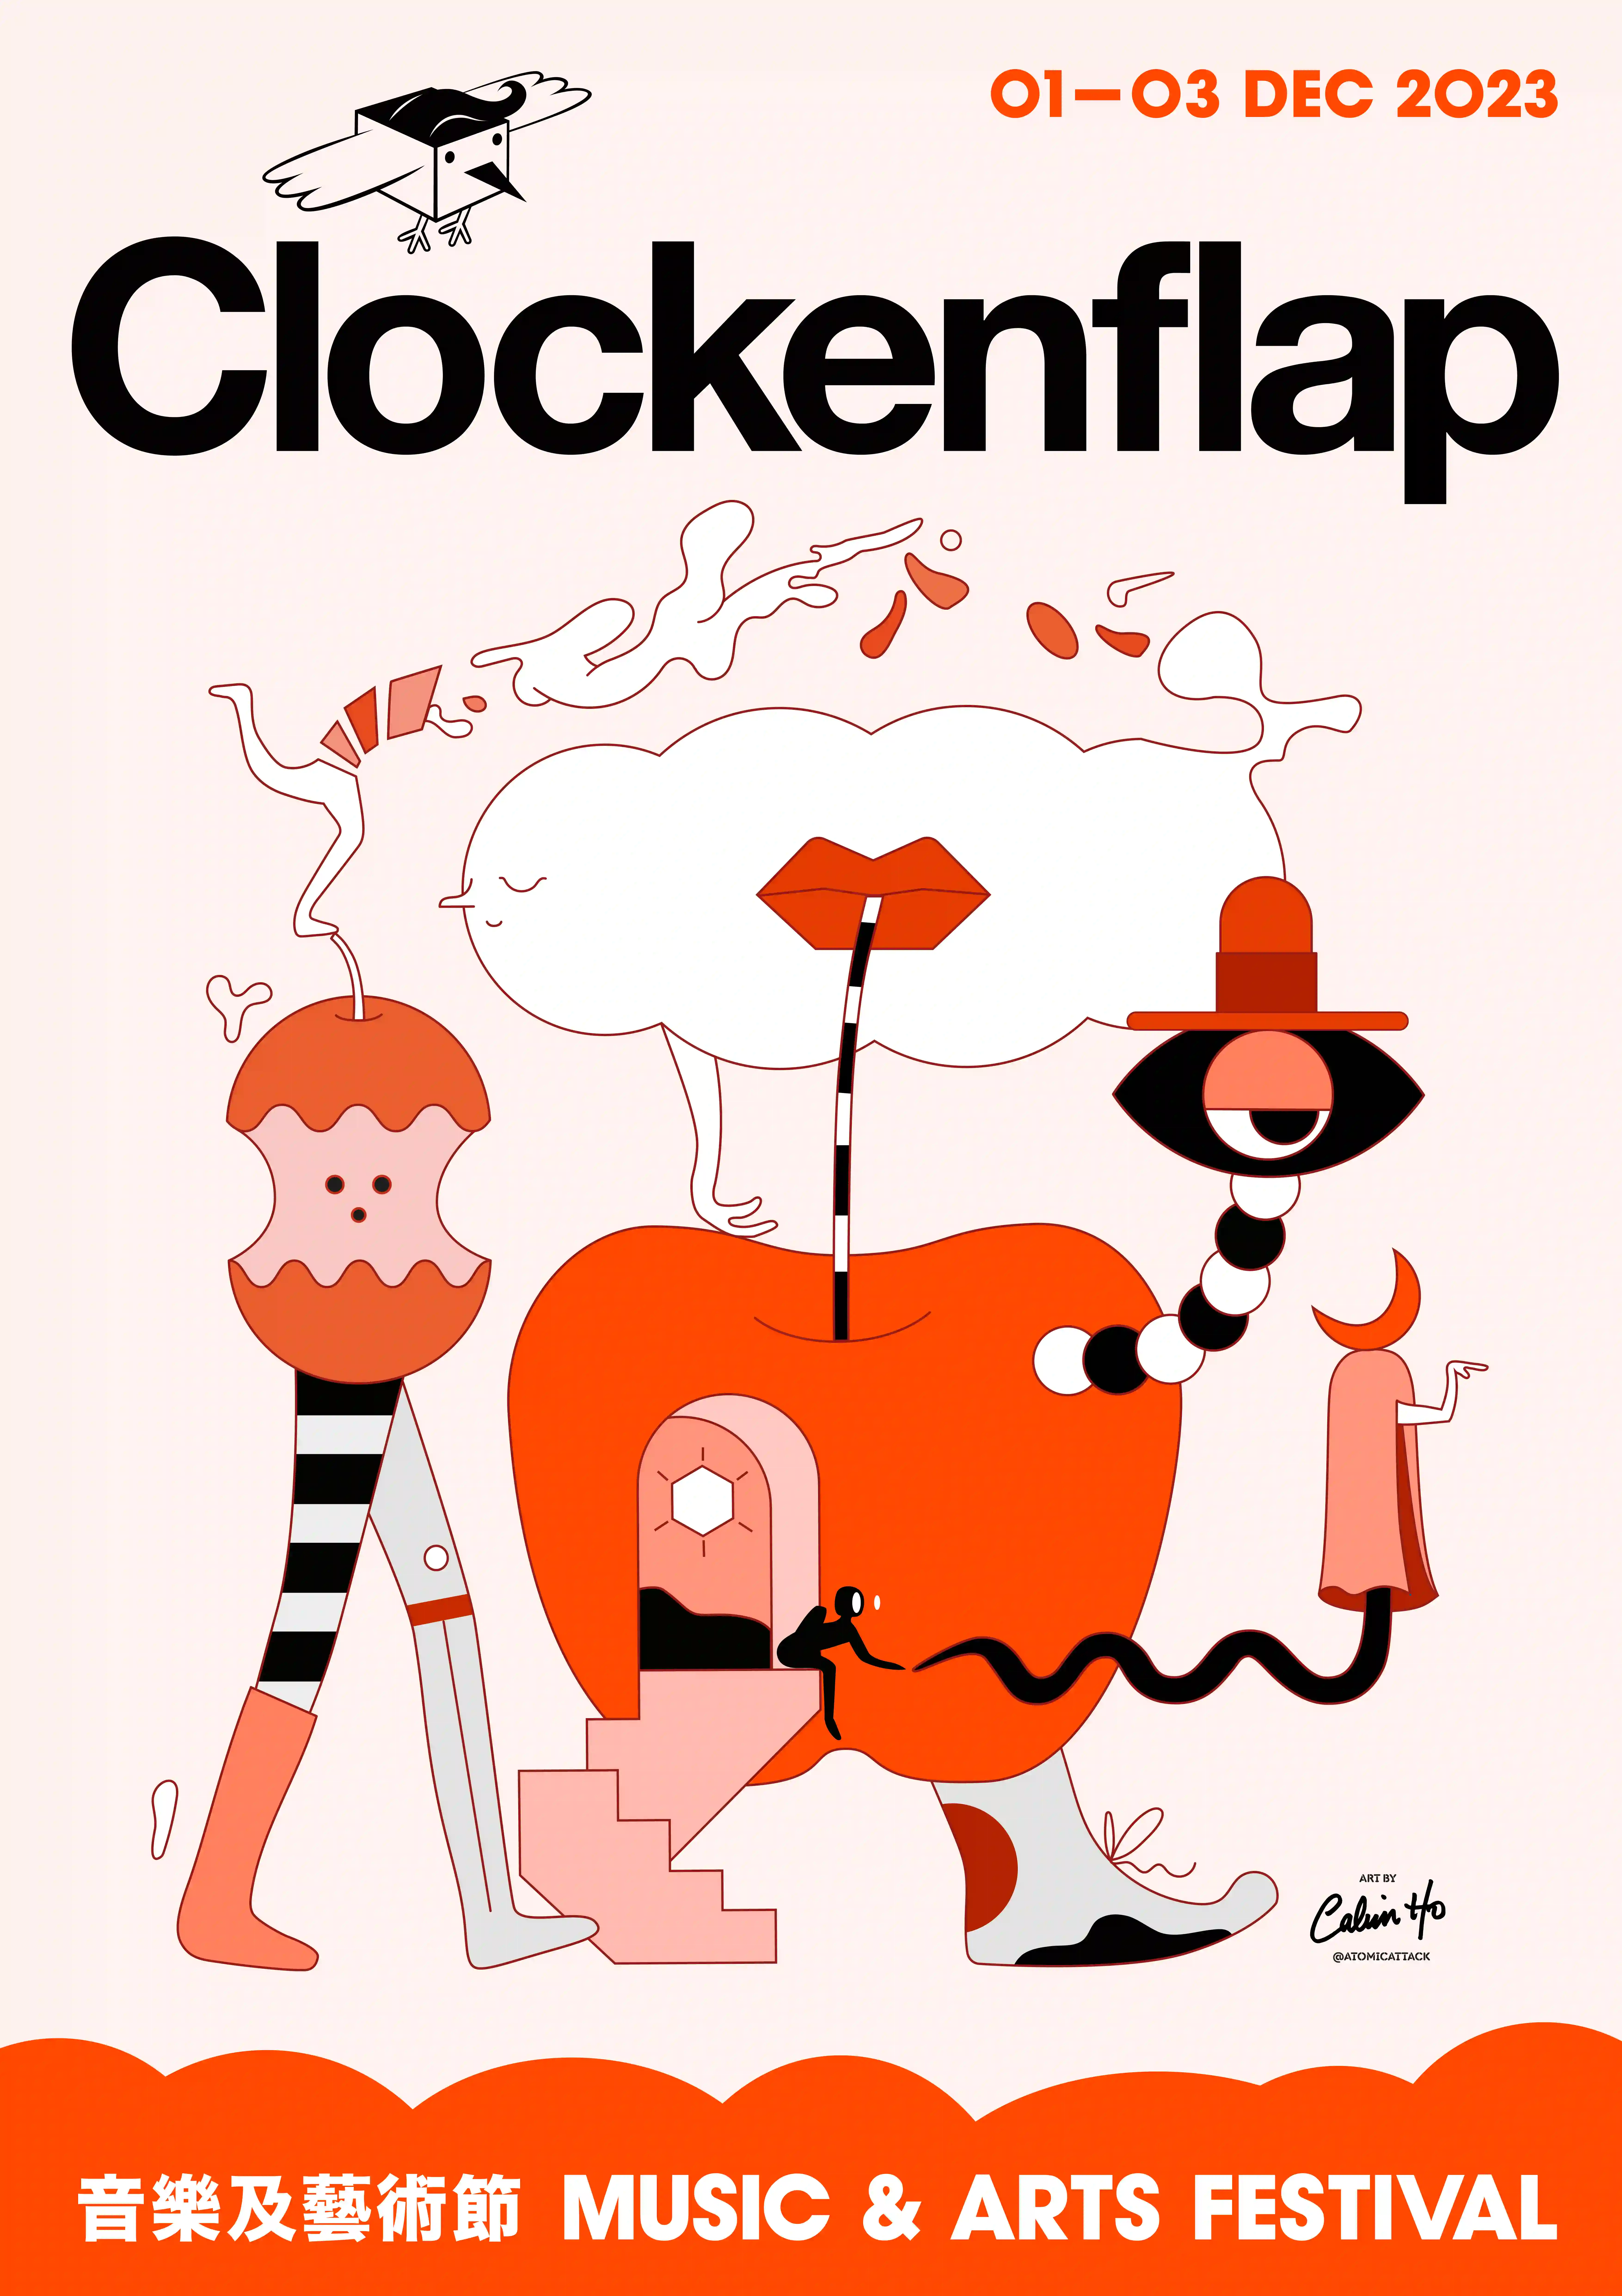 Clockenflap Reveals Headliners and Majority of Lineup for December’s Festival, Including PULP, Joji, Yoasobi, Caroline Polachek, IDLES and More